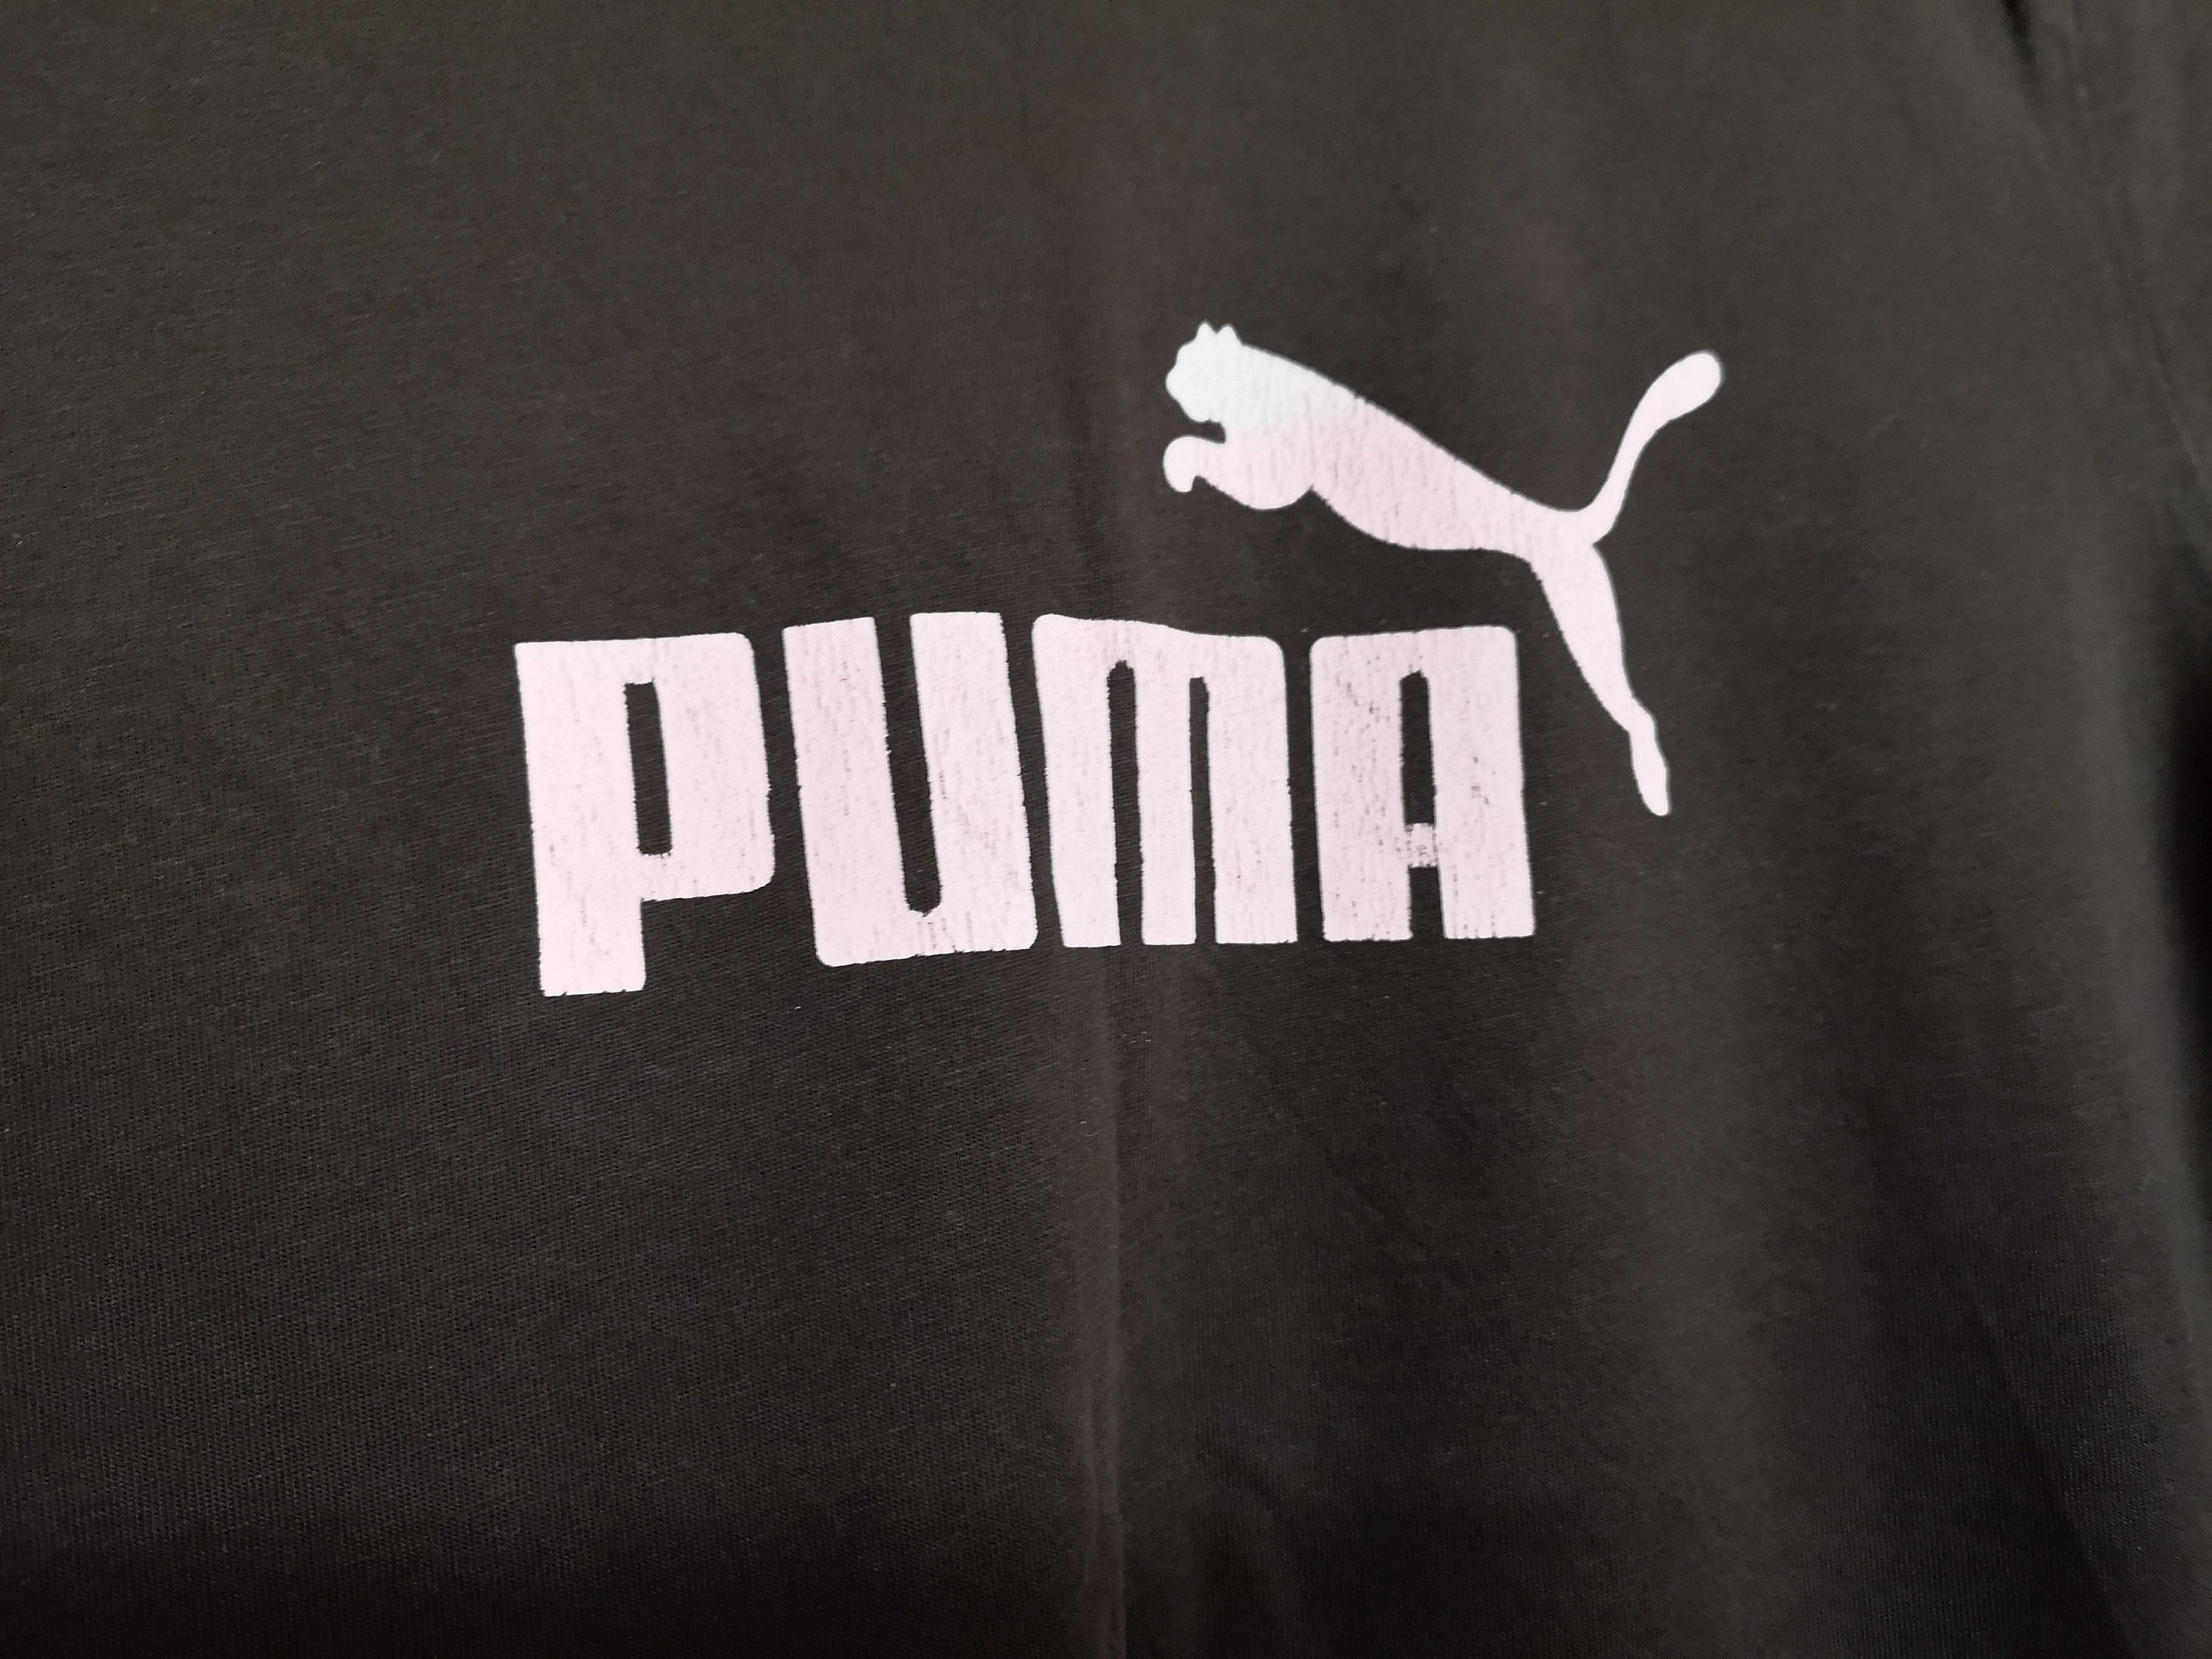 Super Sweet Women's Top Puma Fitting Size XS/S - Etsy UK